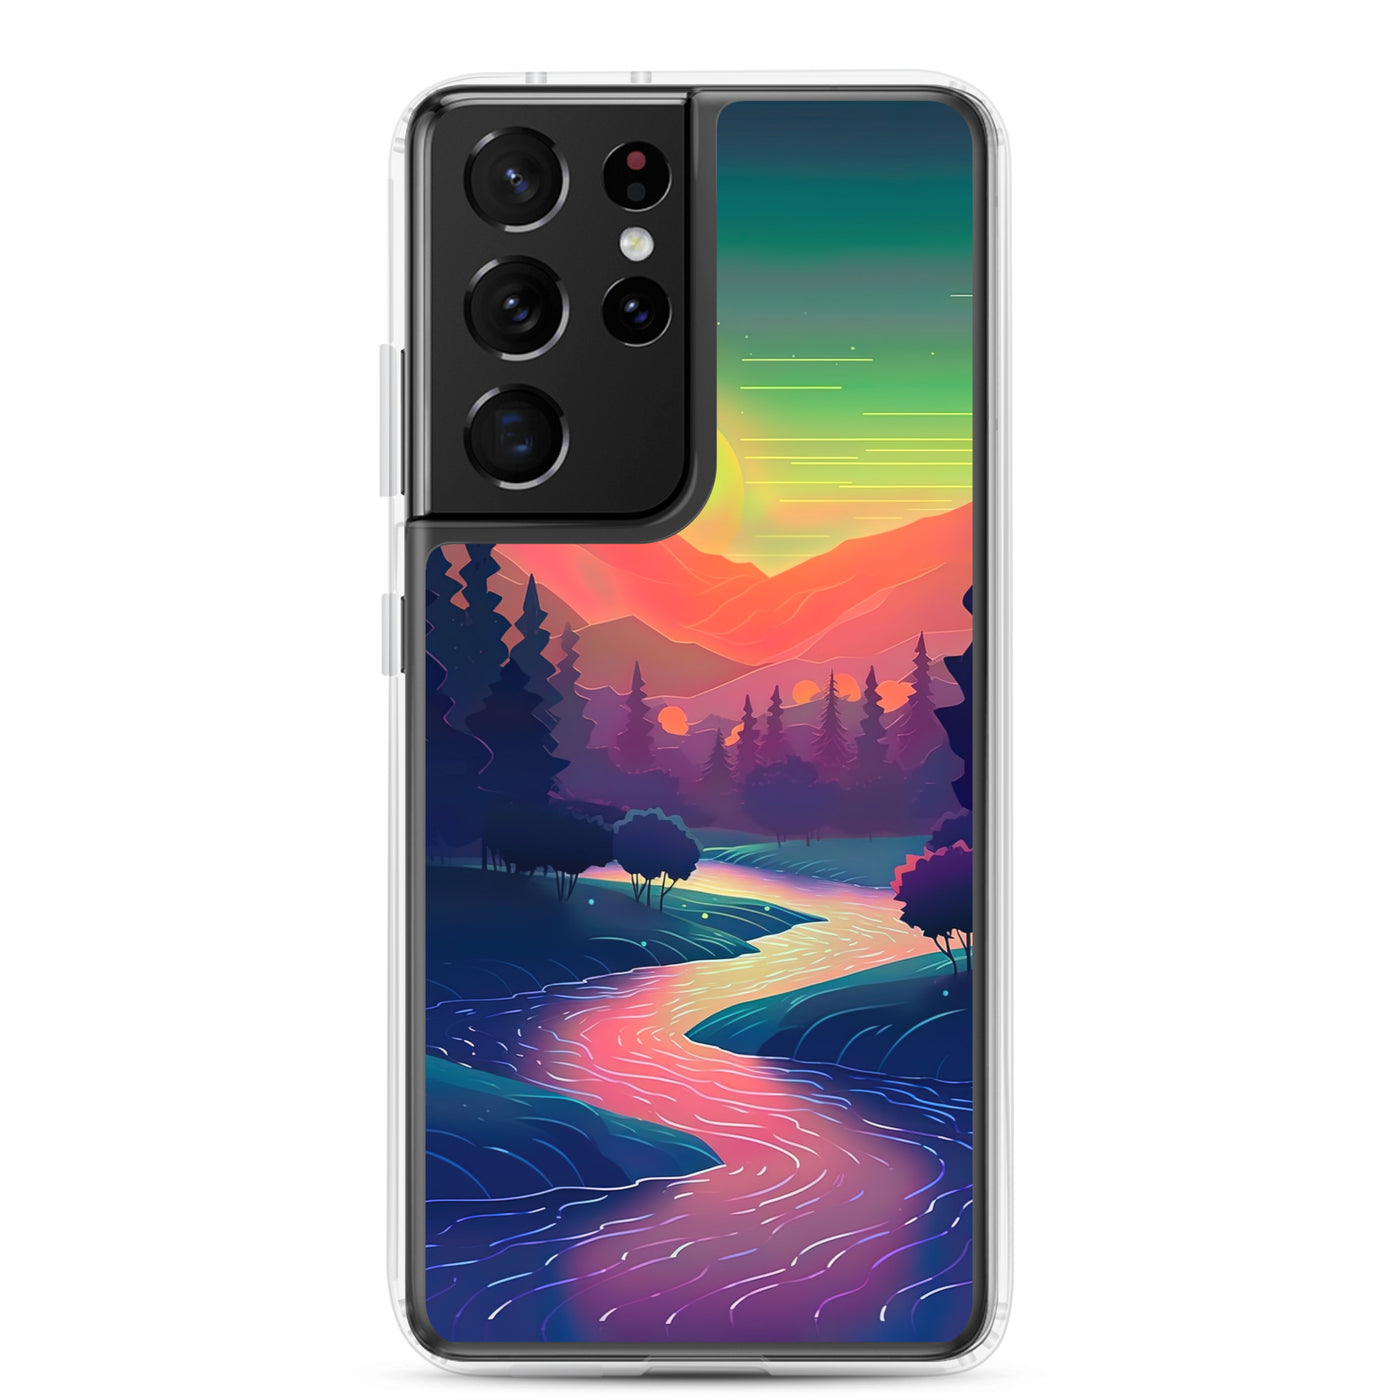 Berge, Fluss, Sonnenuntergang - Malerei - Samsung Schutzhülle (durchsichtig) berge xxx Samsung Galaxy S21 Ultra